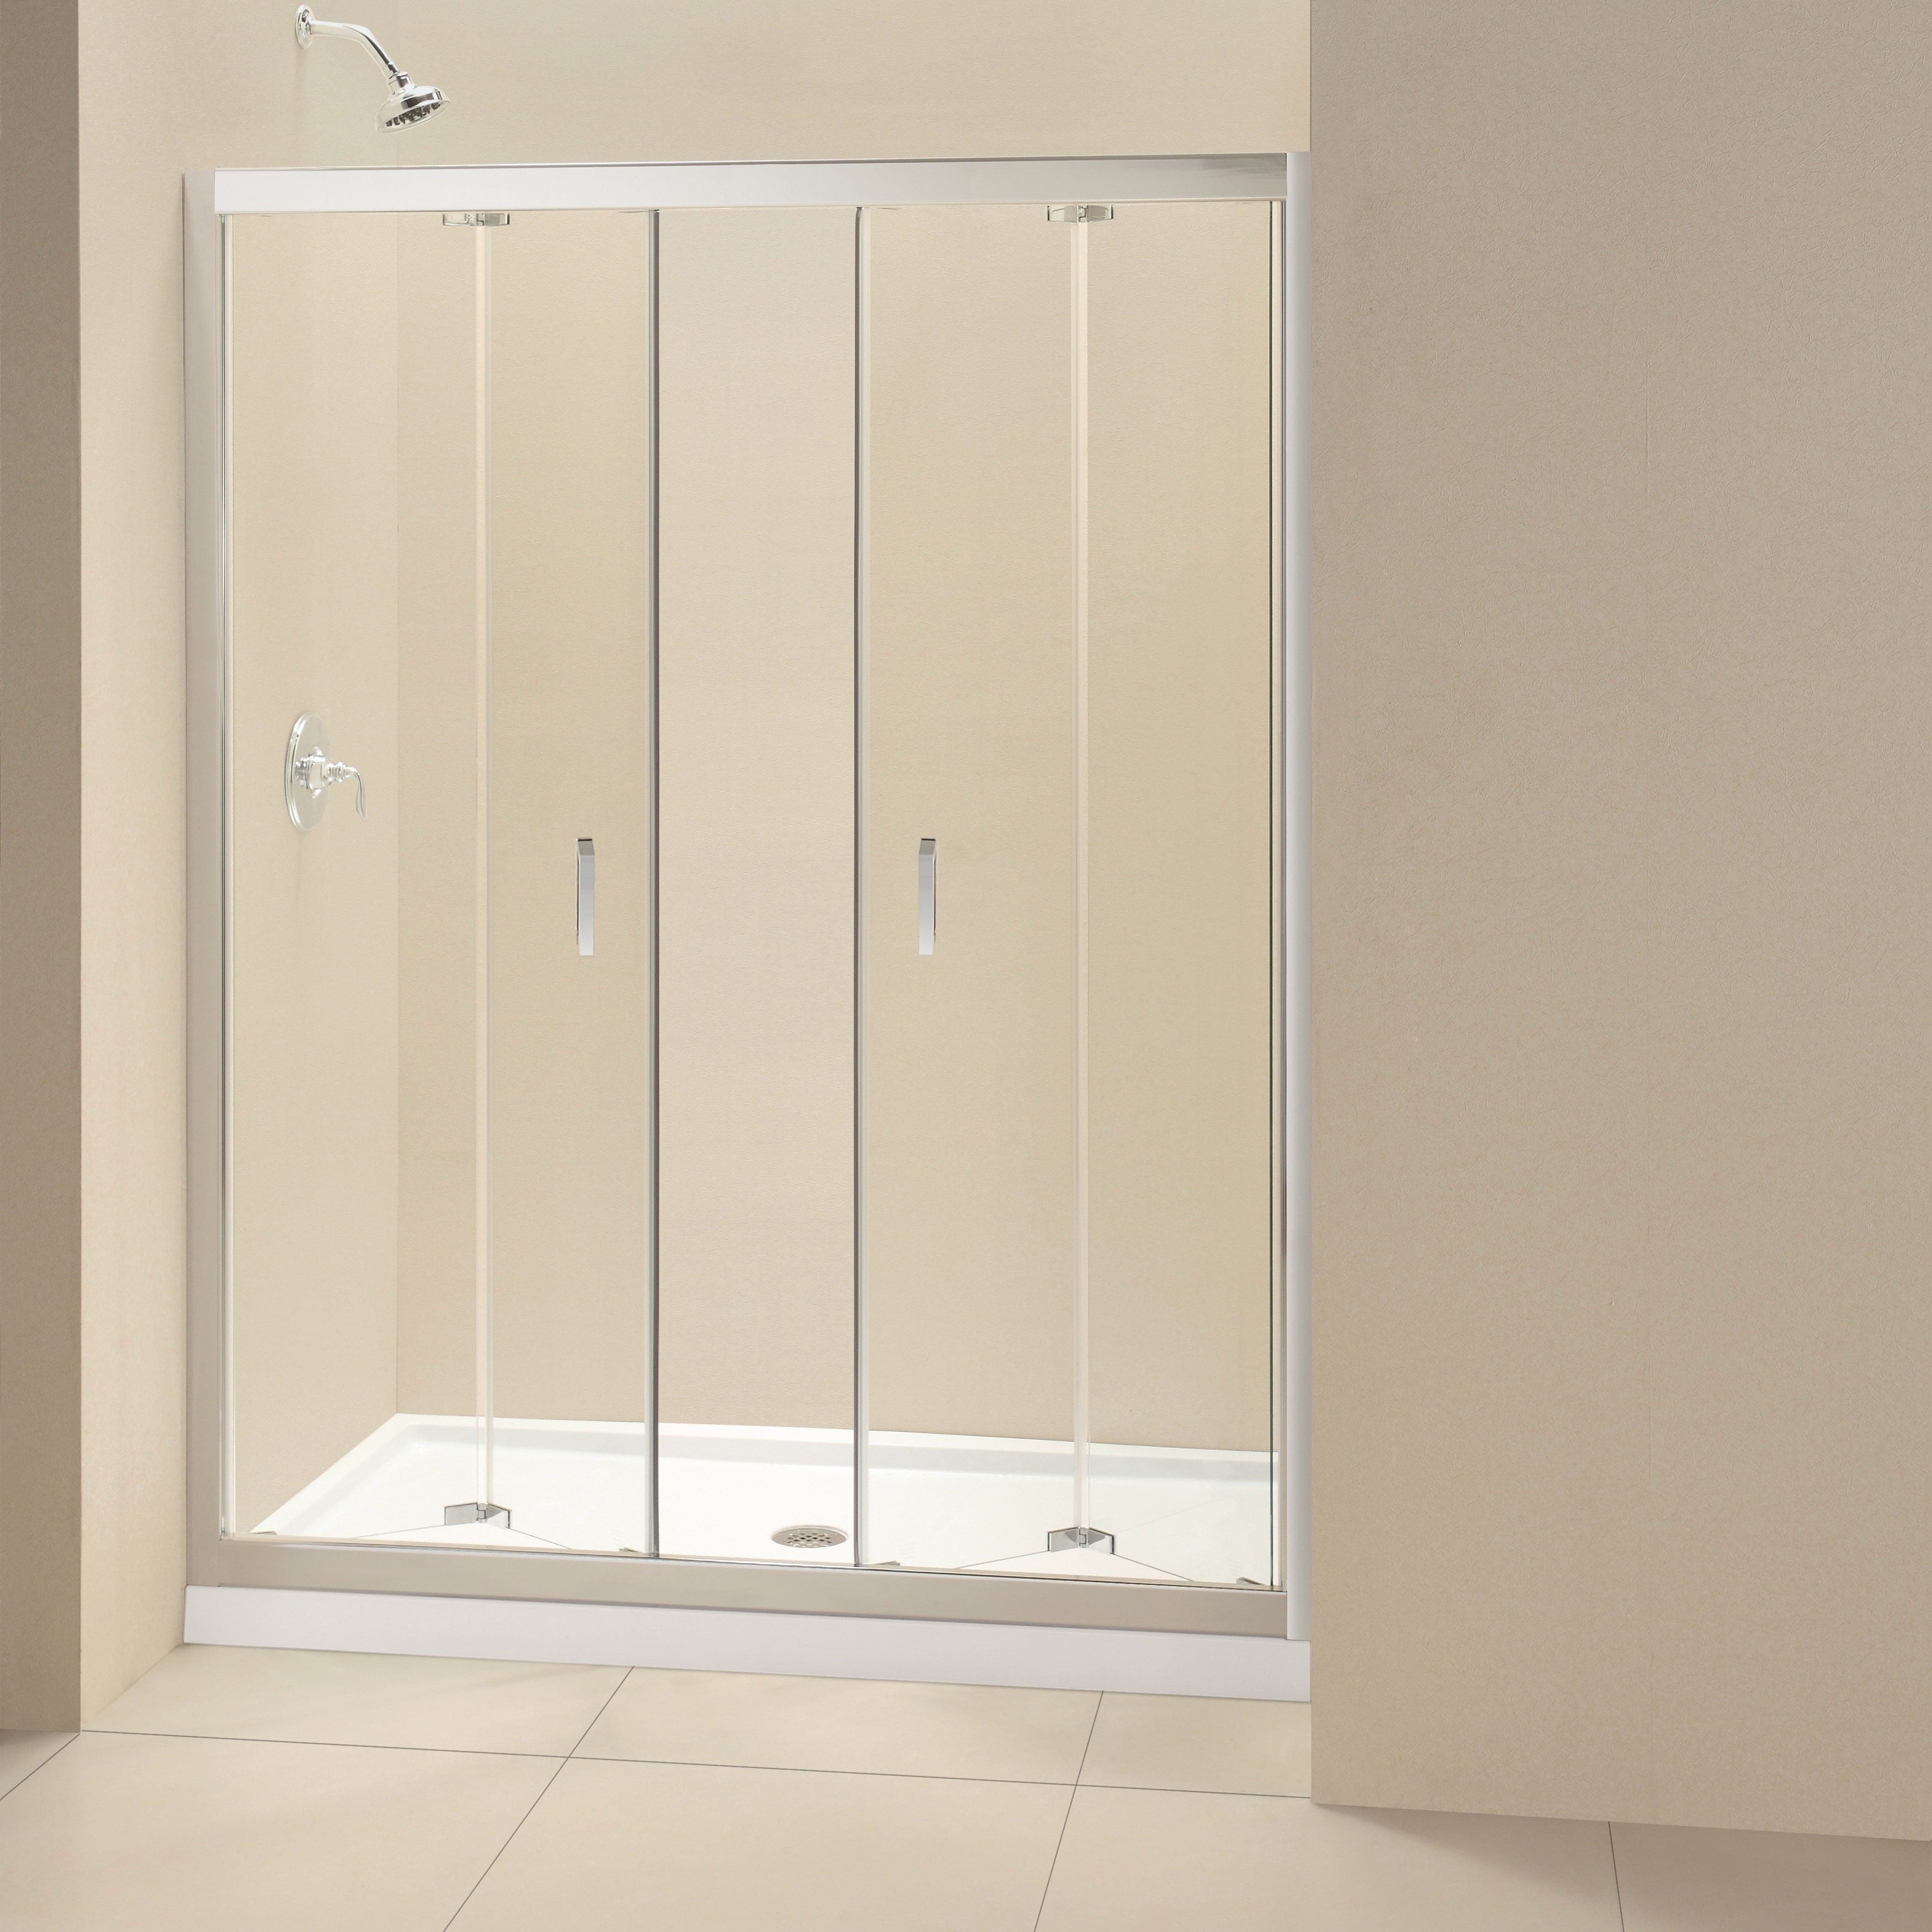 Dreamline Butterfly Bi fold Shower Door And 34x60 inch Shower Base